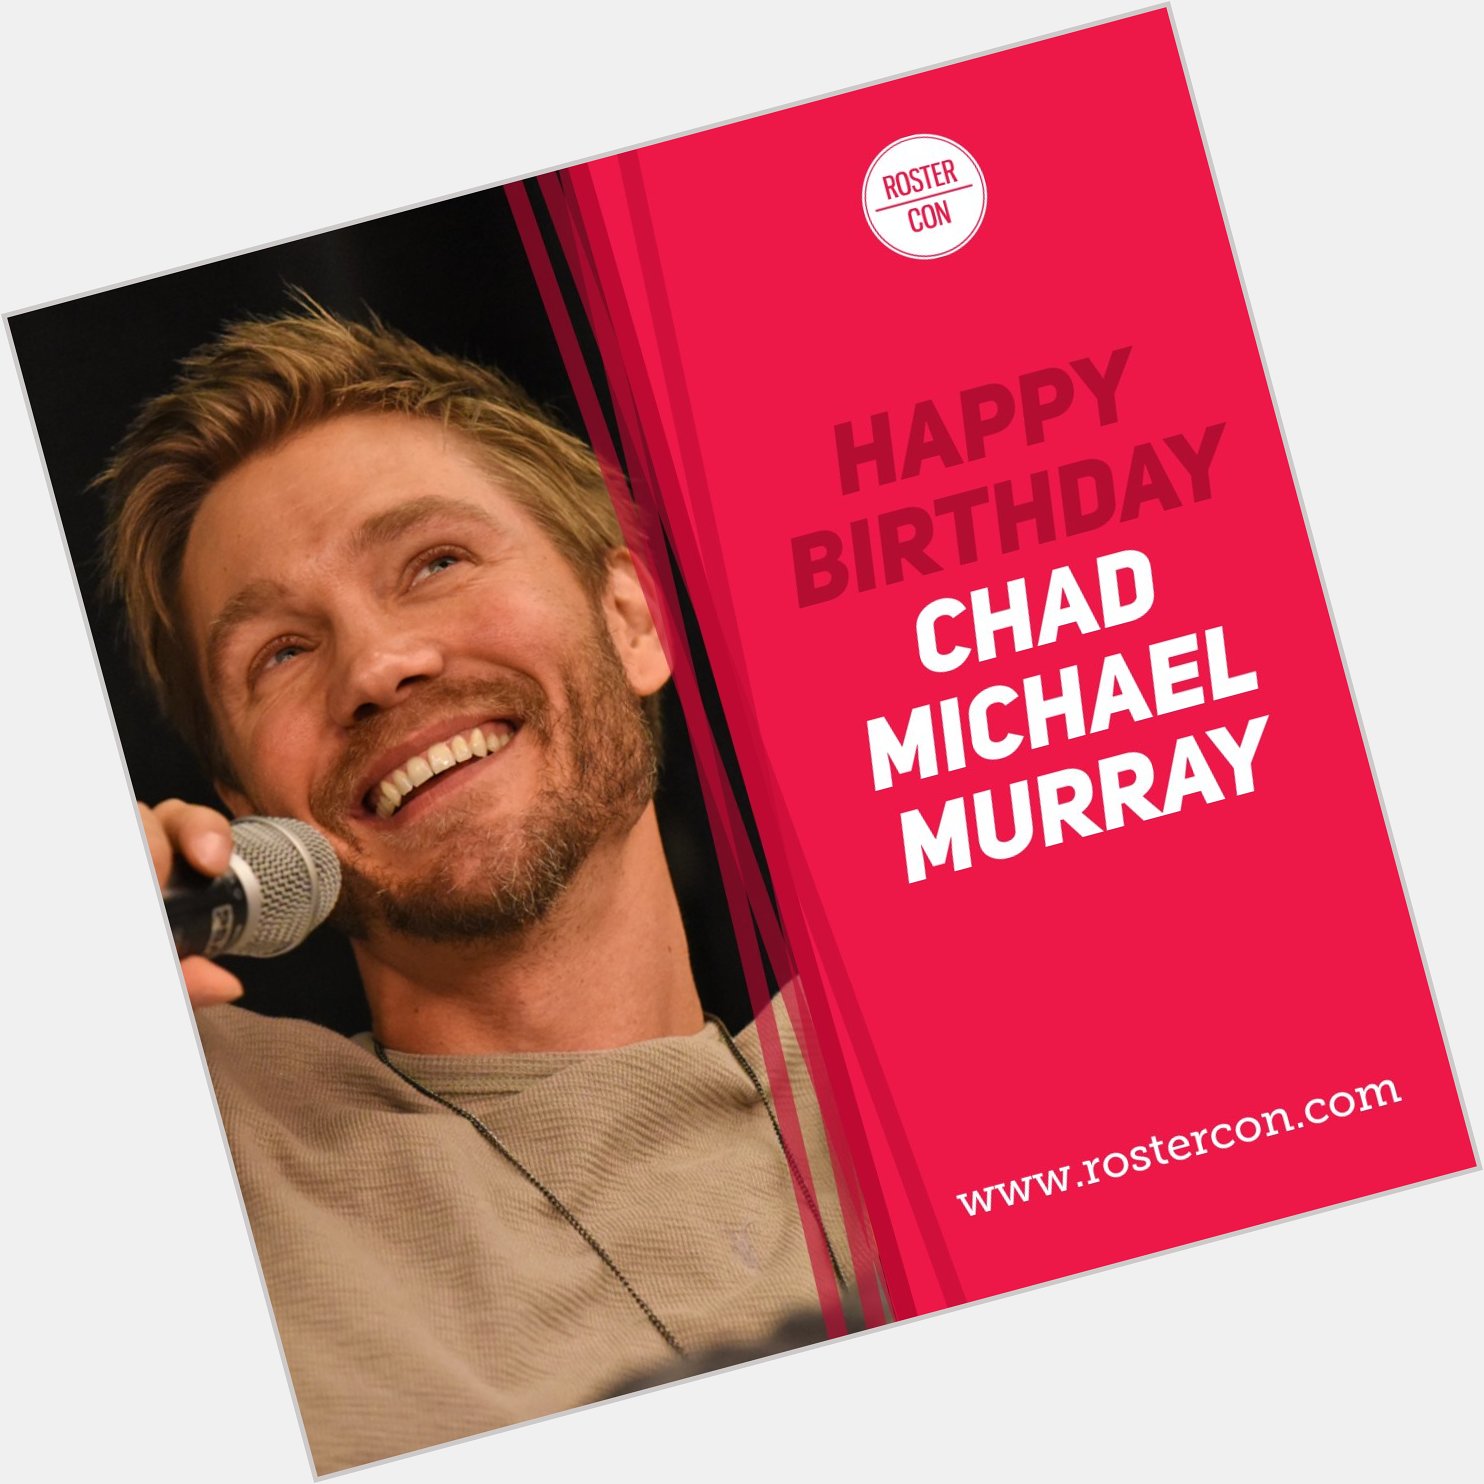  Happy Birthday Chad Michael Murray ! Souvenirs / Throwback :  